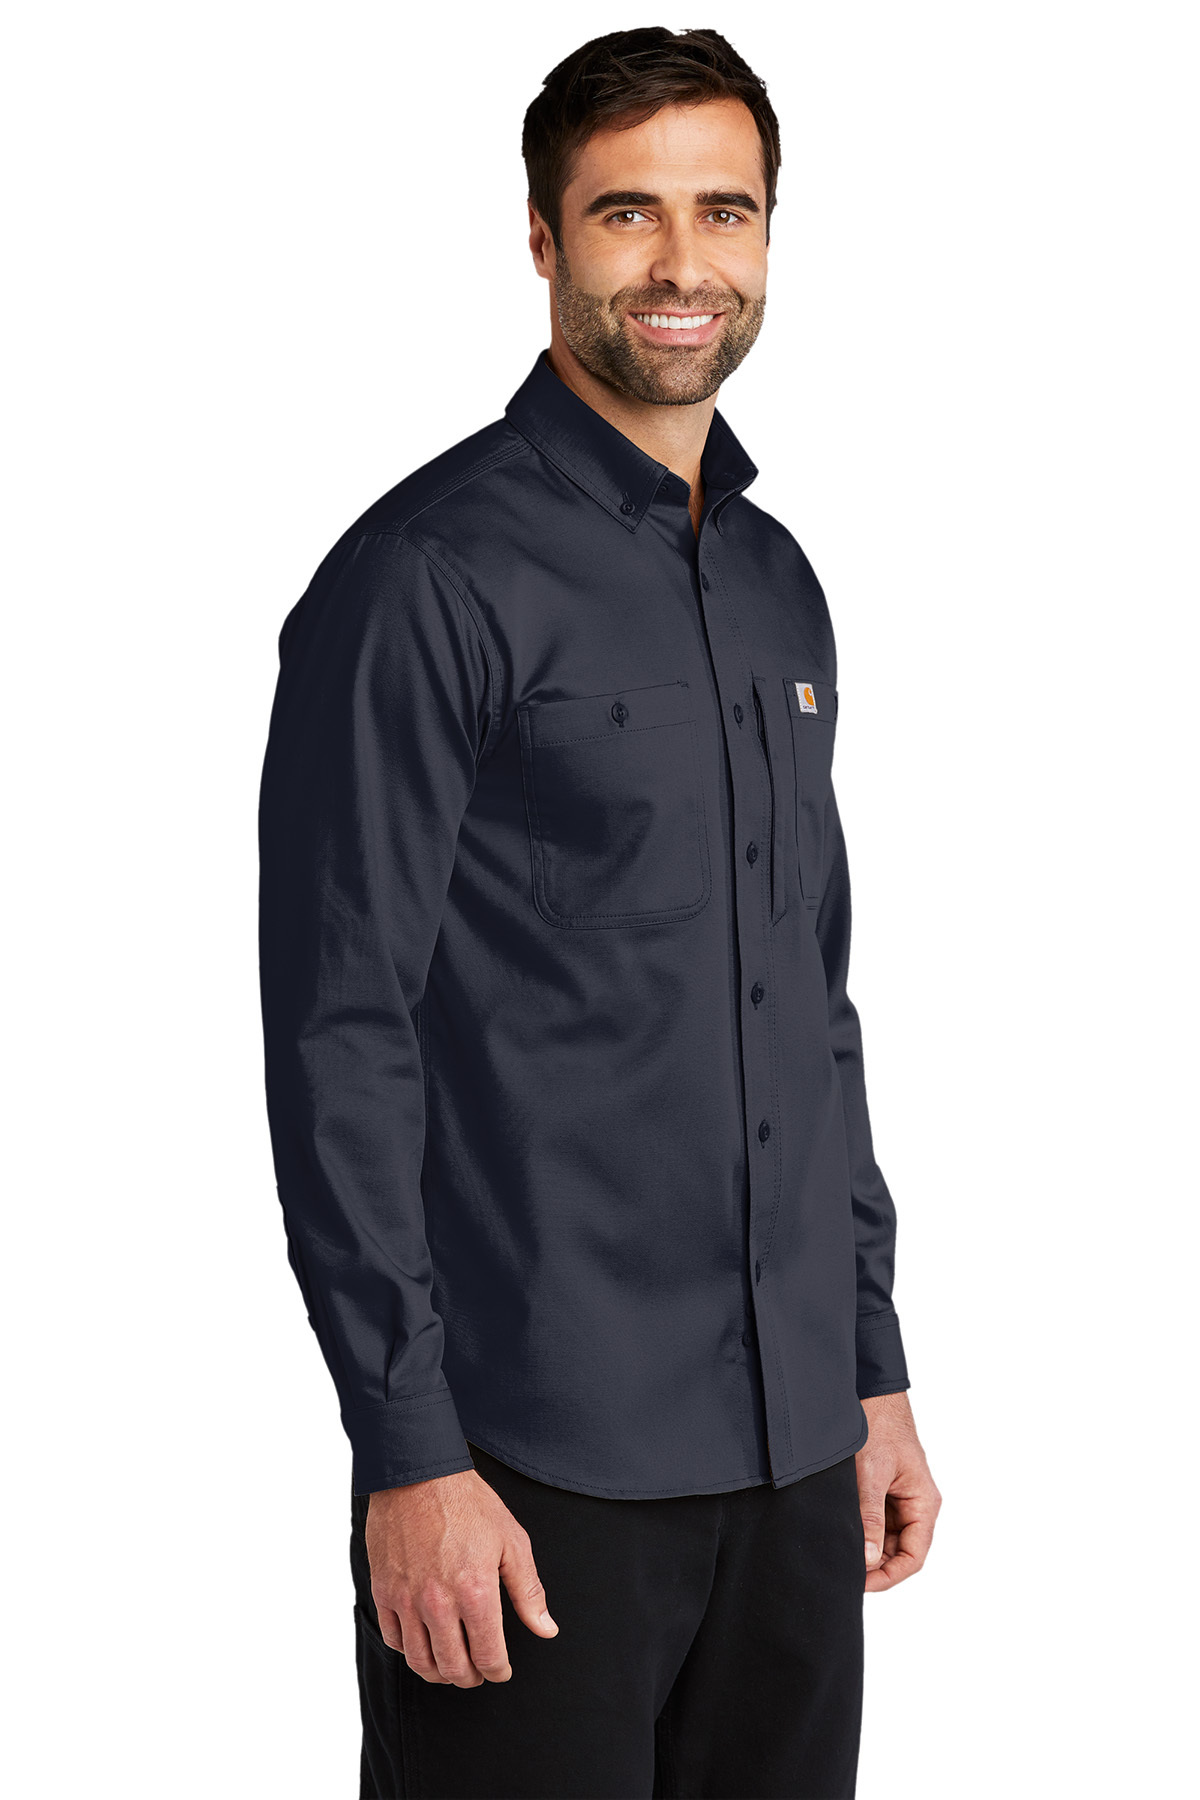 Carhartt Rugged Professional Series Long Sleeve Shirt | Product | SanMar